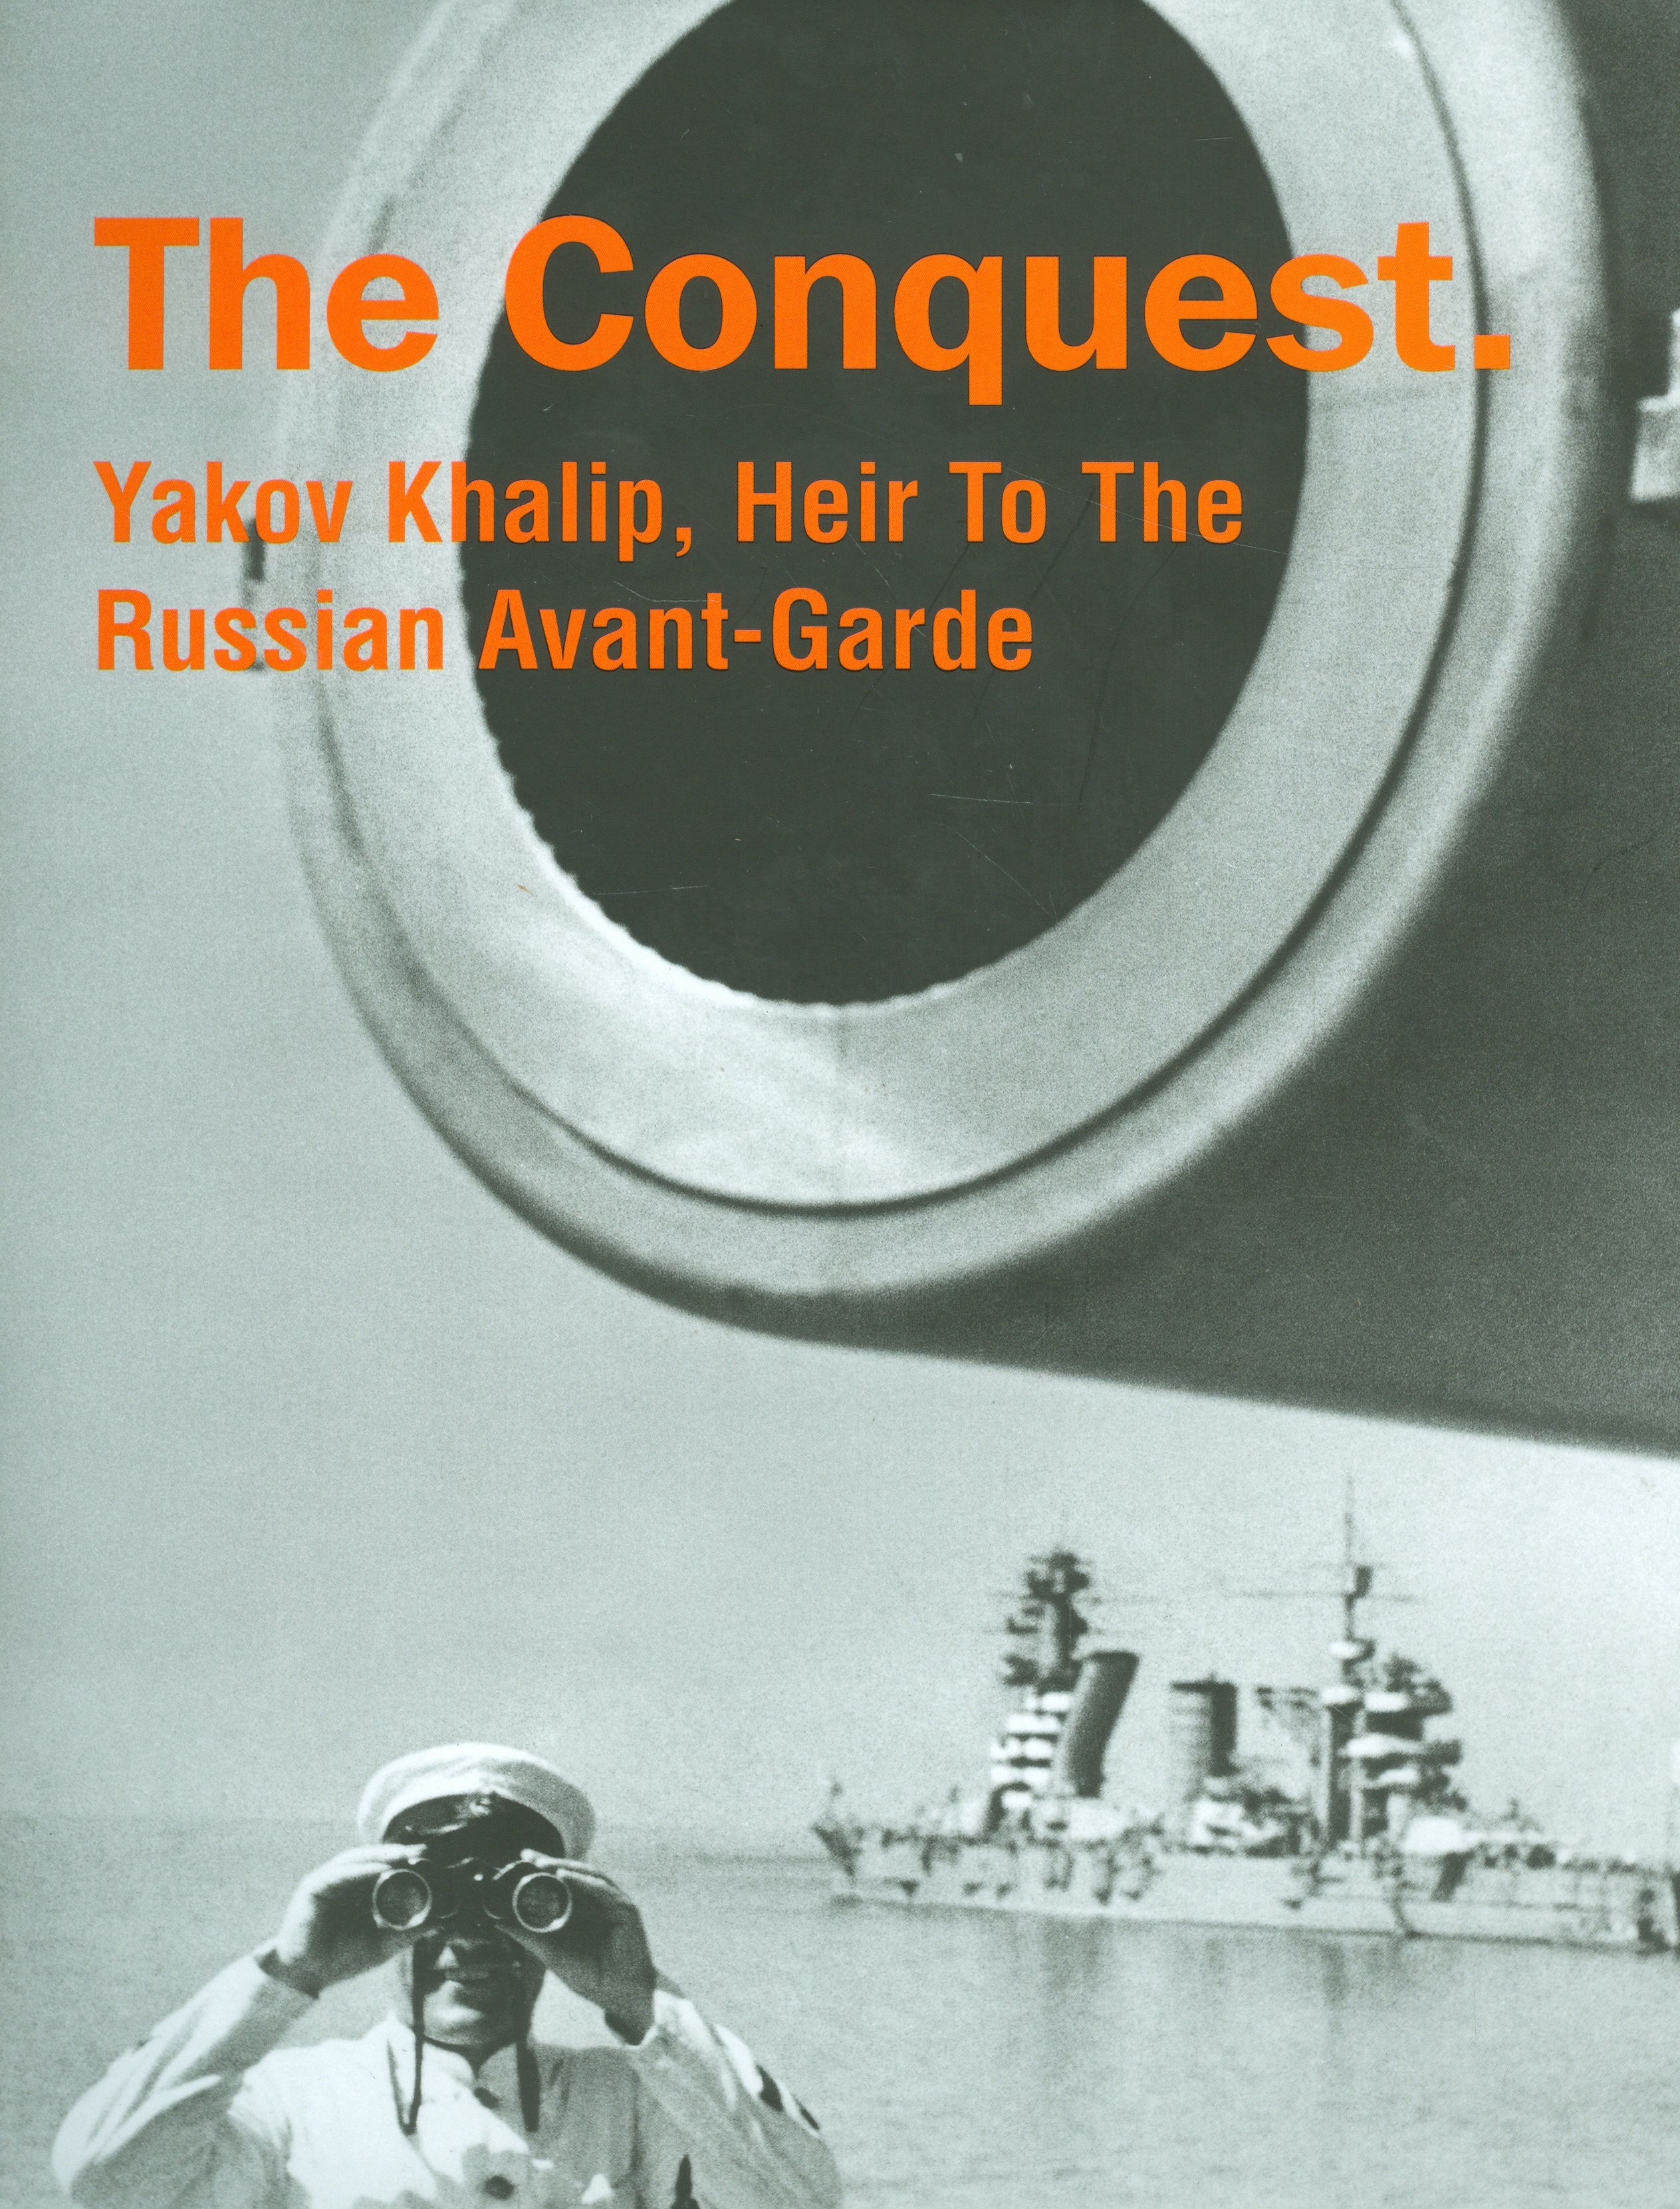 Фотоальбом.The Conquest.Yakov Khalip,Heir To The Russian Avant-Garde (на англ.яз.) the conquest yakov khalip heir to the russian avant garde